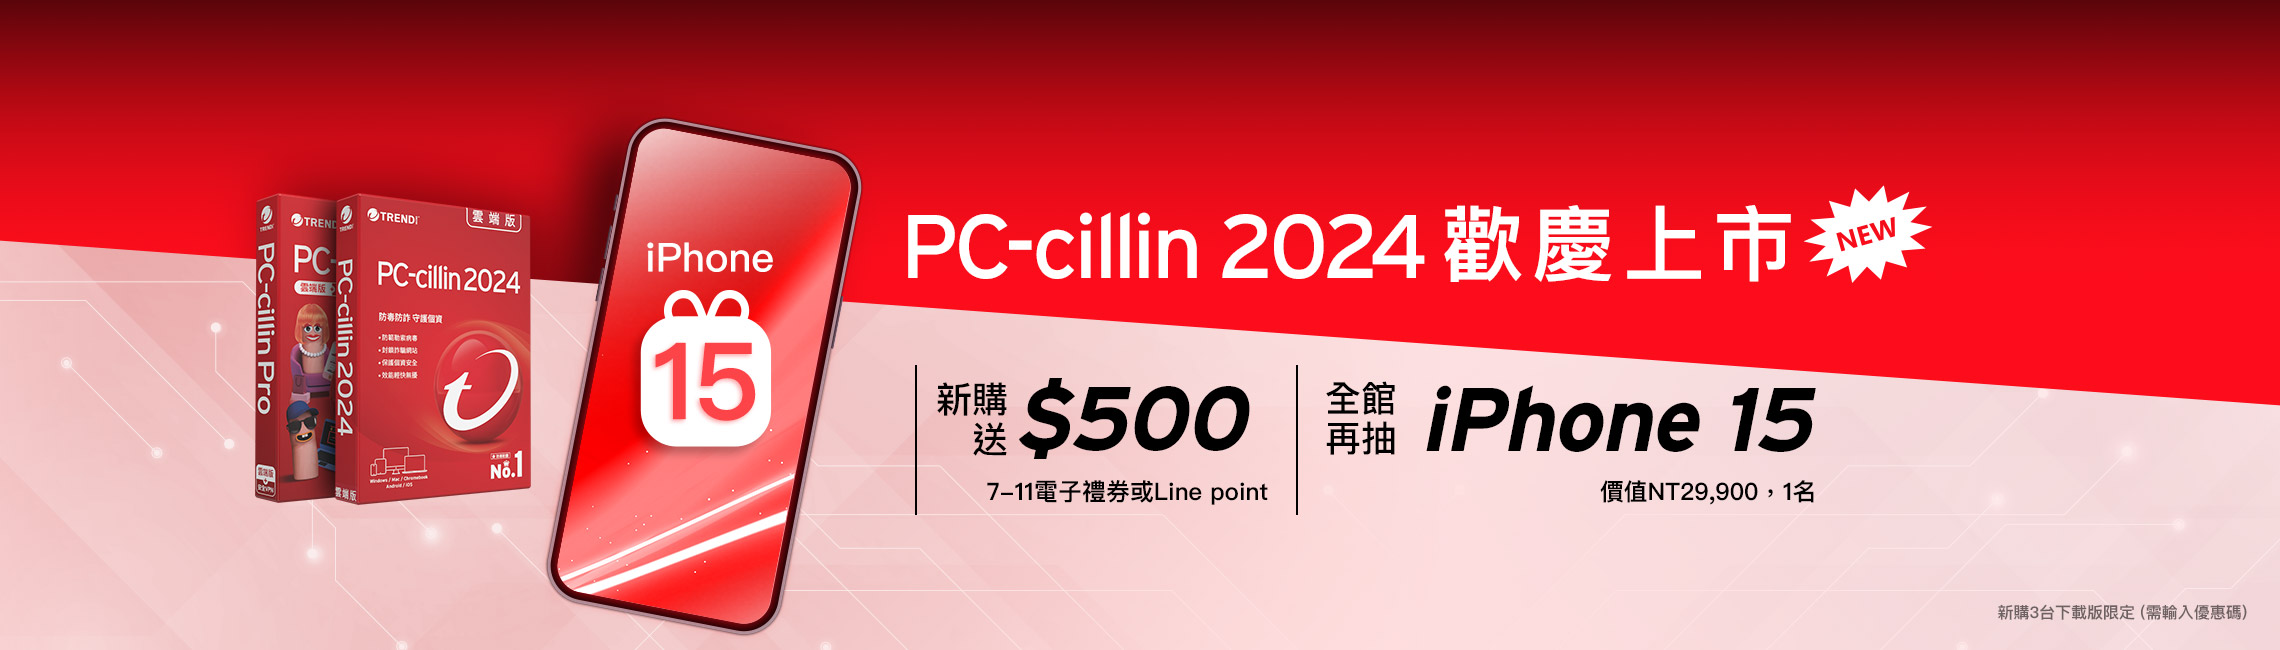 PC-cillin 2024 慶上市